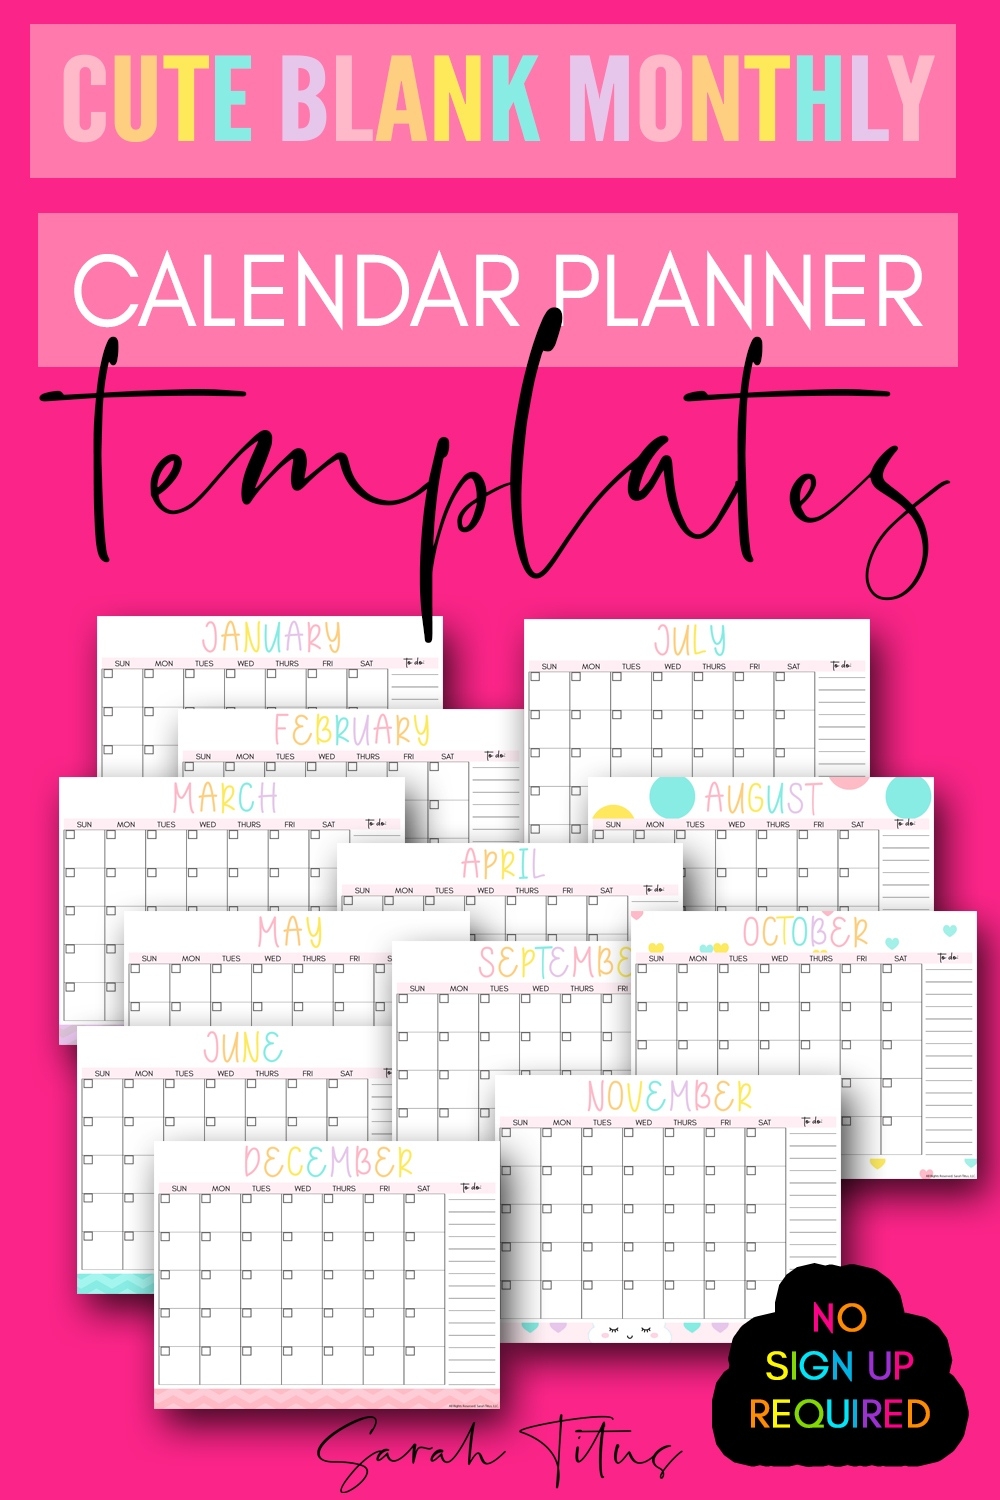 Cute Blank Monthly Calendar Planner Templates - Sarah Titus Free Calendar Layout Templates